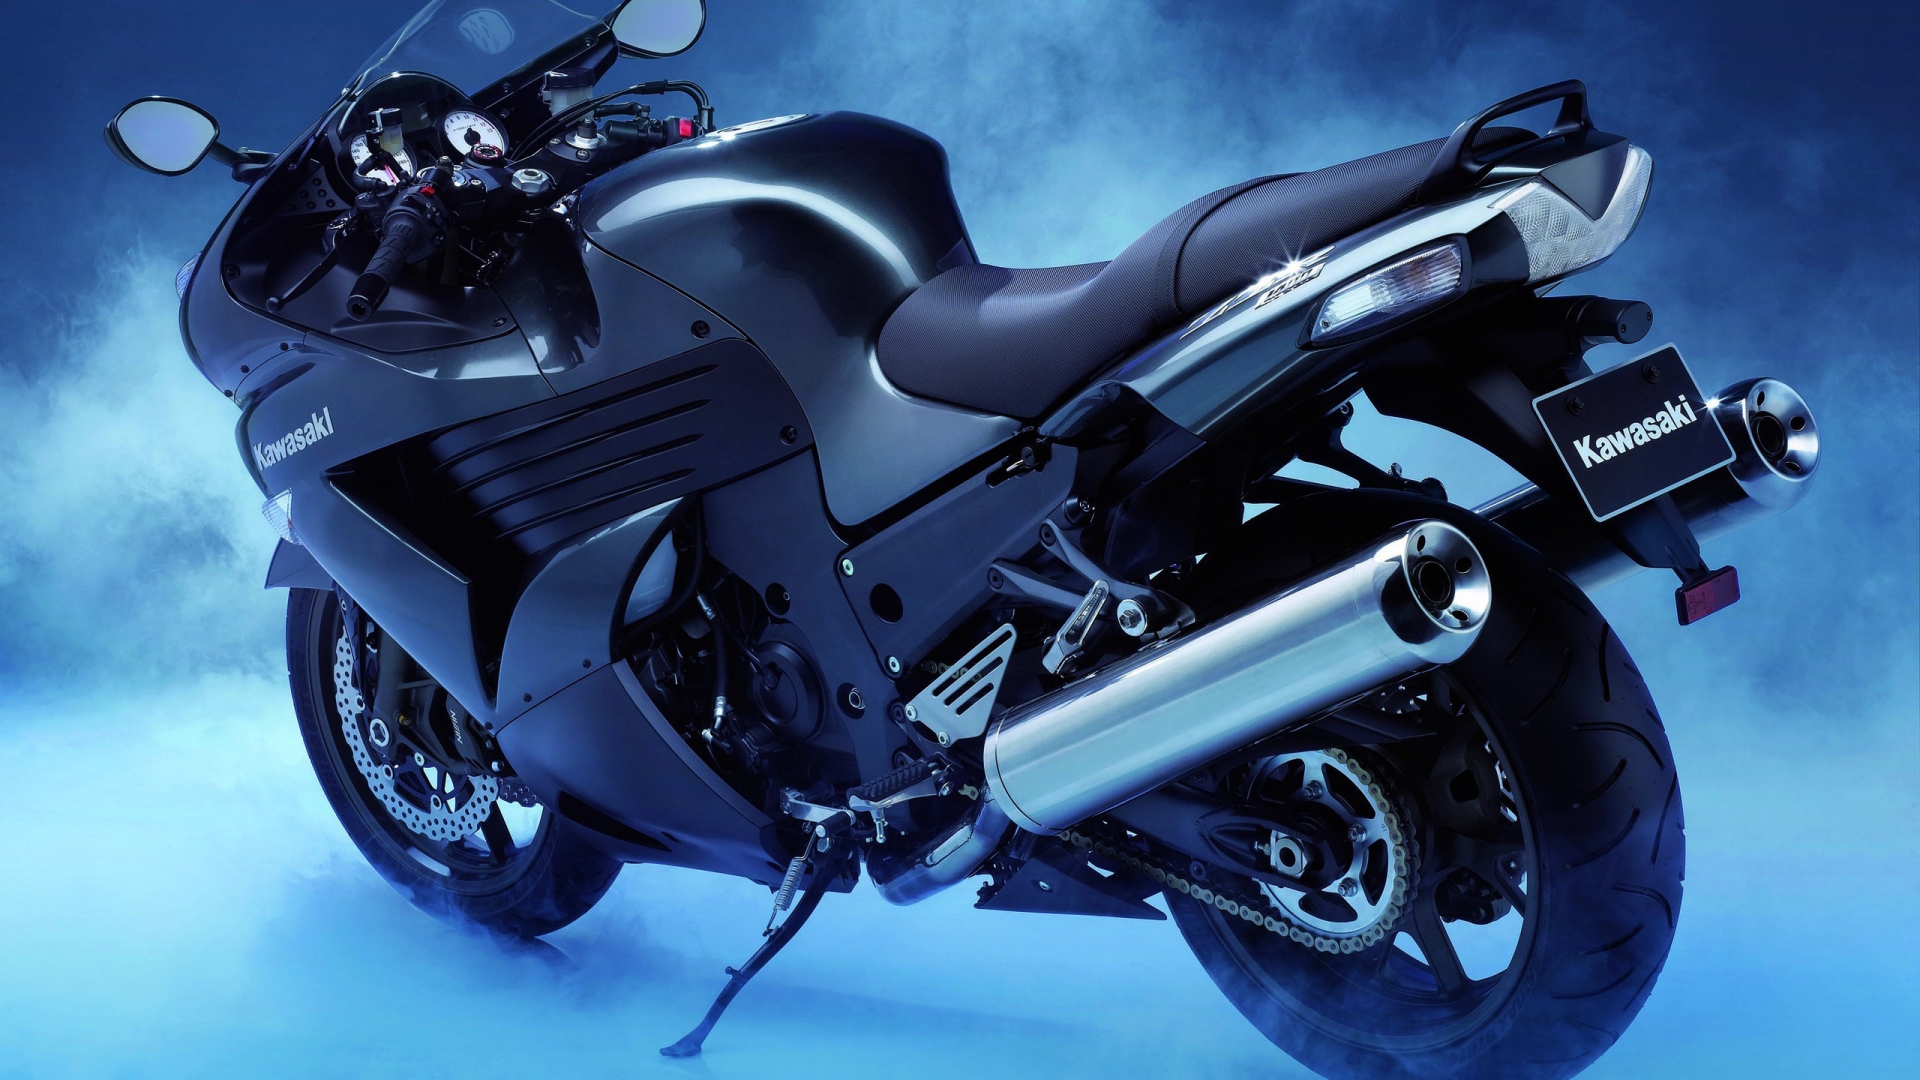 Kawasaki Ninja Black for 1920 x 1080 HDTV 1080p resolution